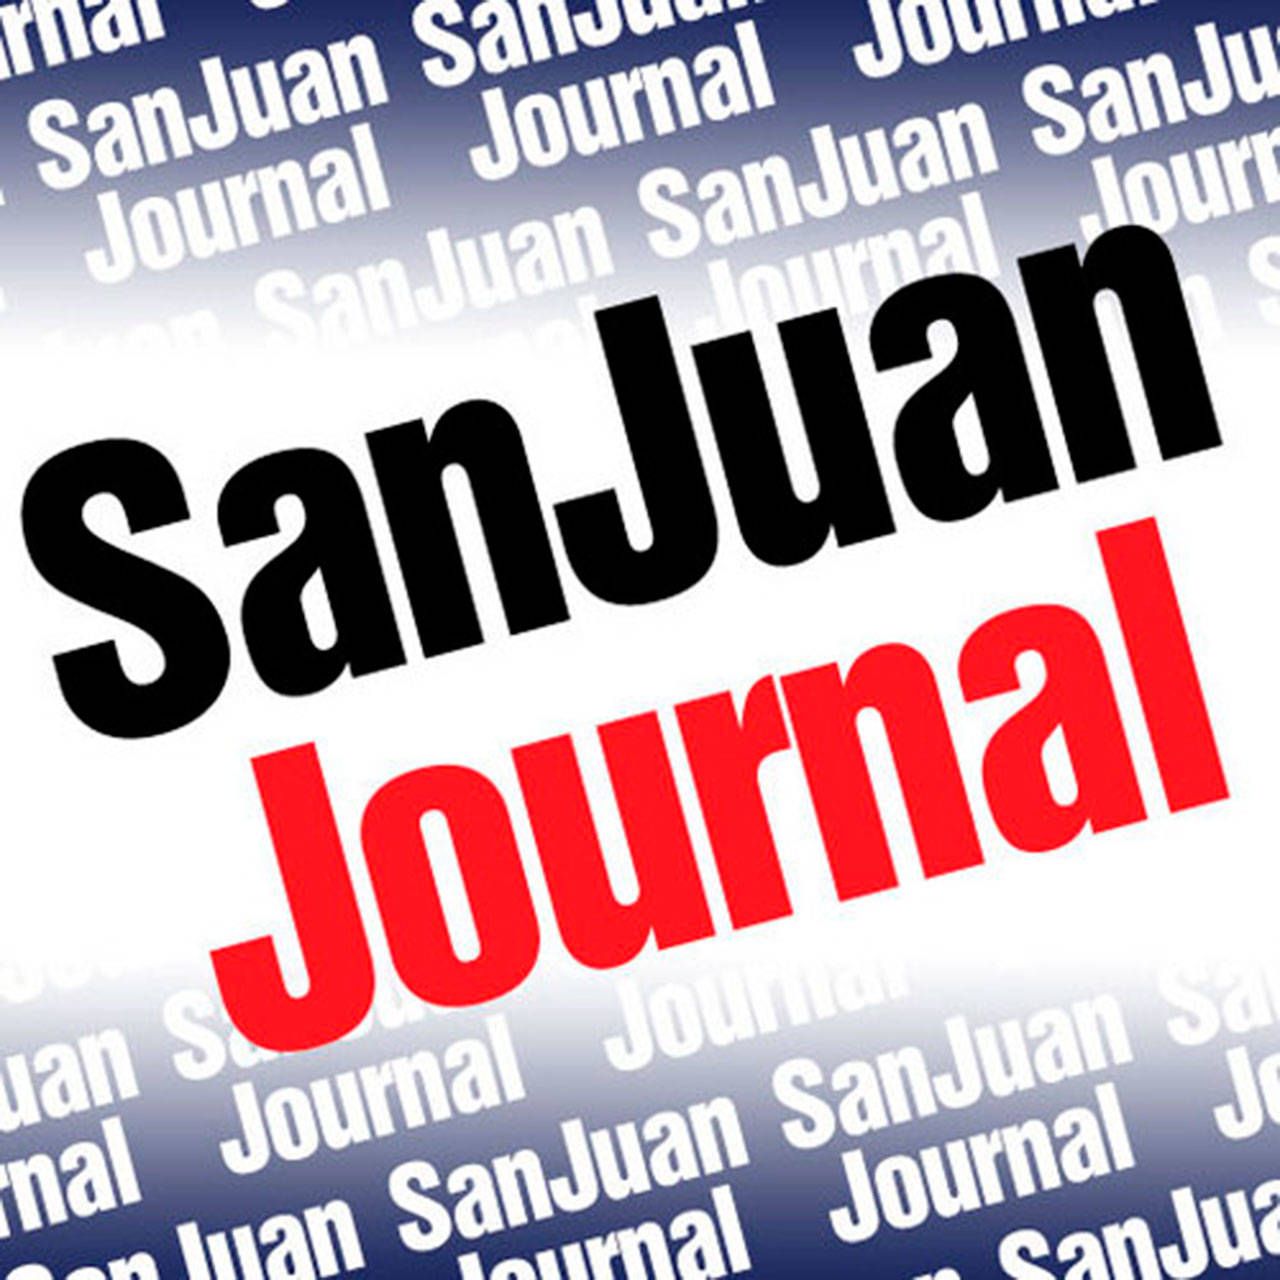 Holiday traditions bring San Juan islanders together | Editorial